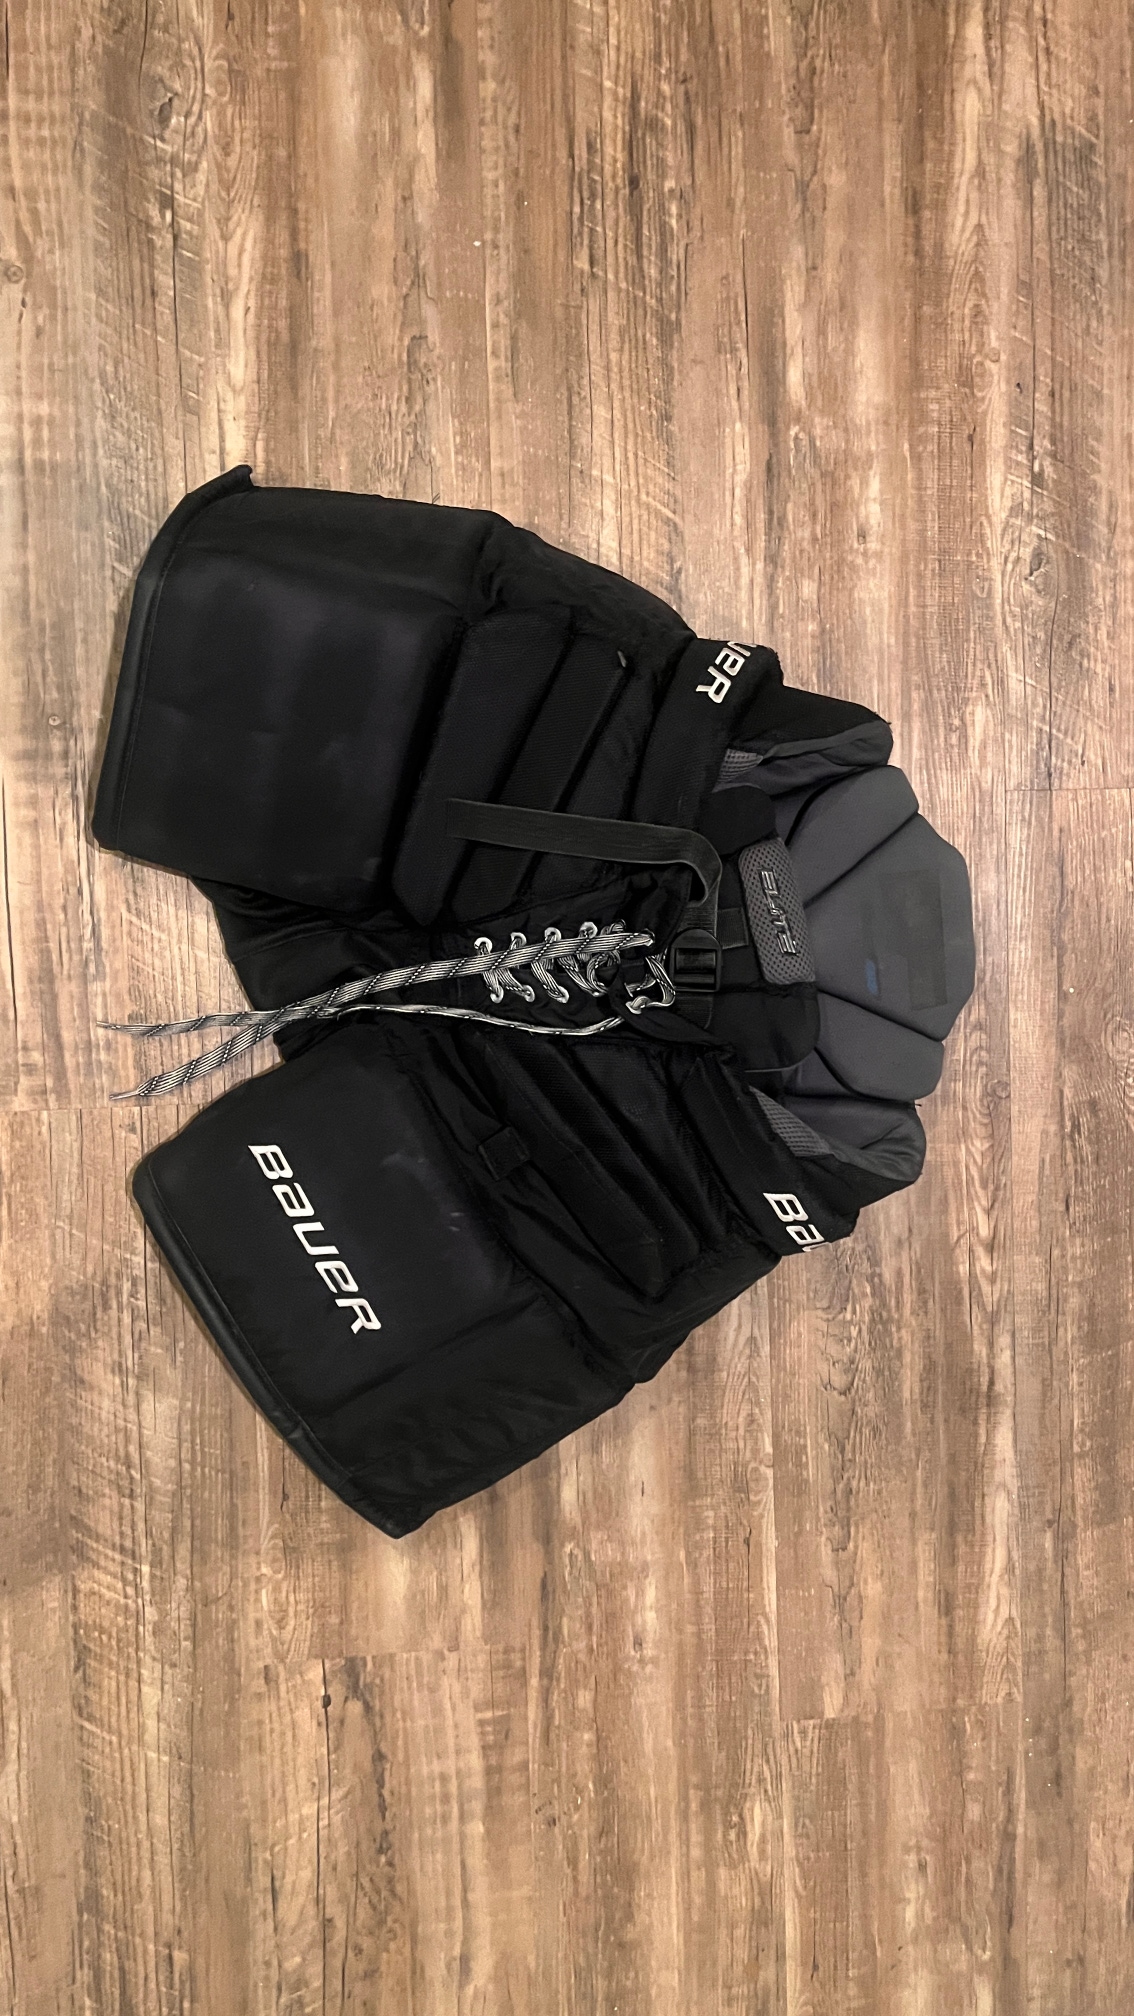 Intermediate Used Medium Bauer Elite Hockey Goalie Pants